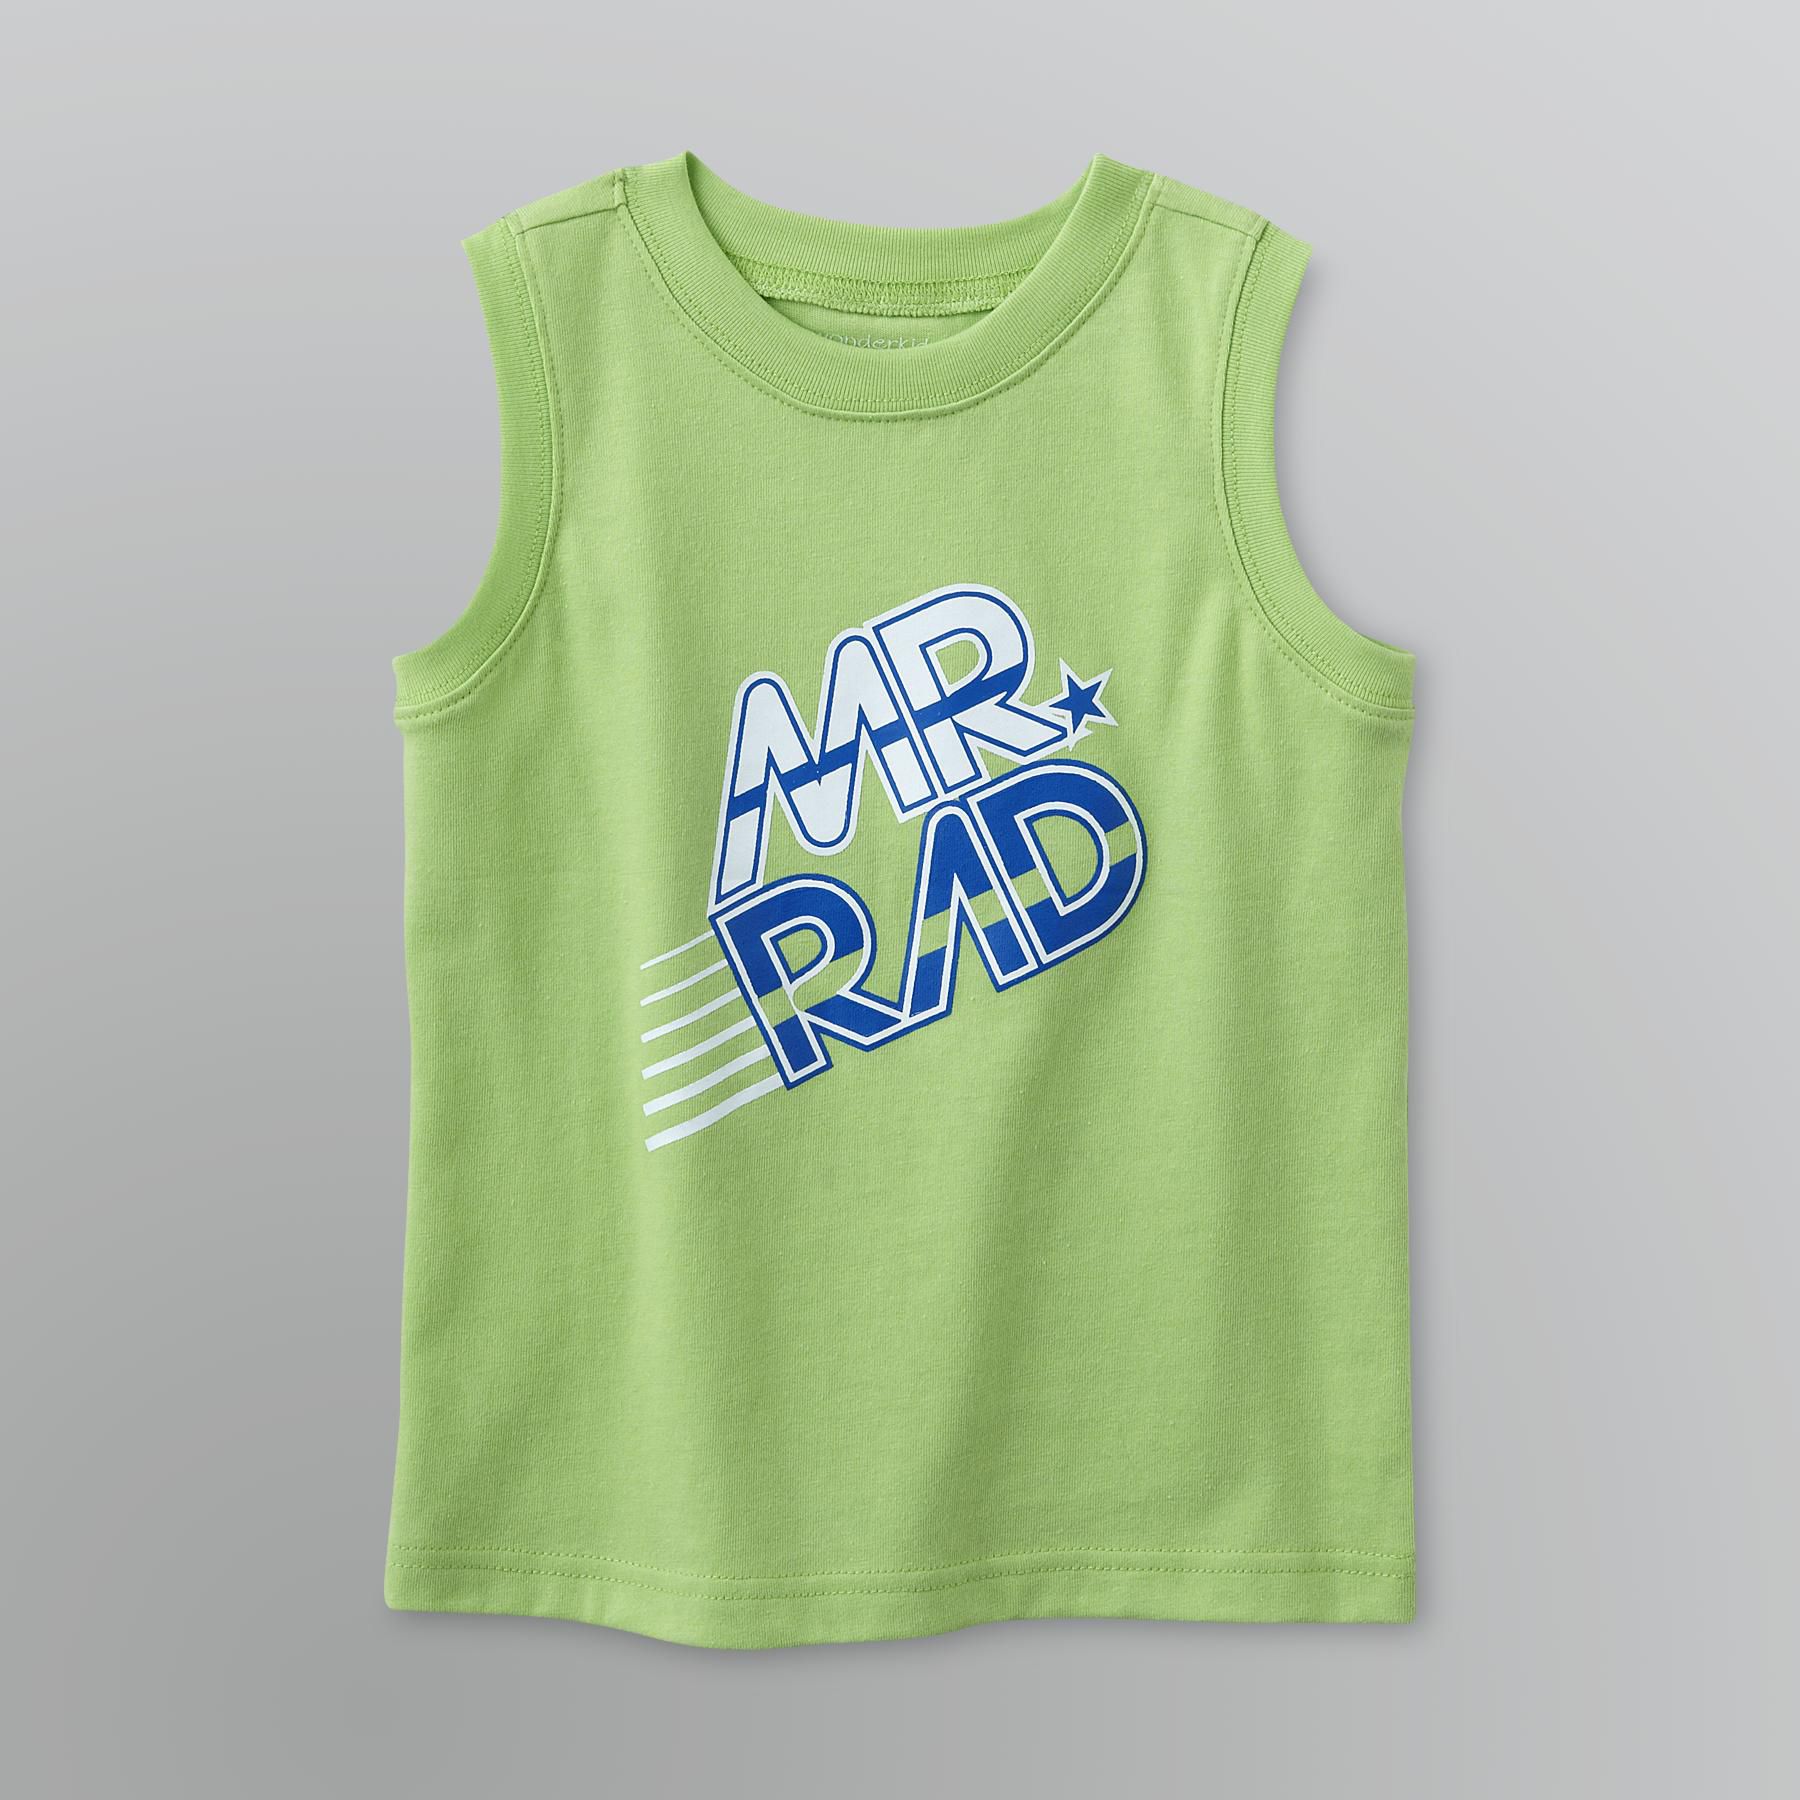 WonderKids Toddler Boy's Mr. Rad Muscle T-Shirt